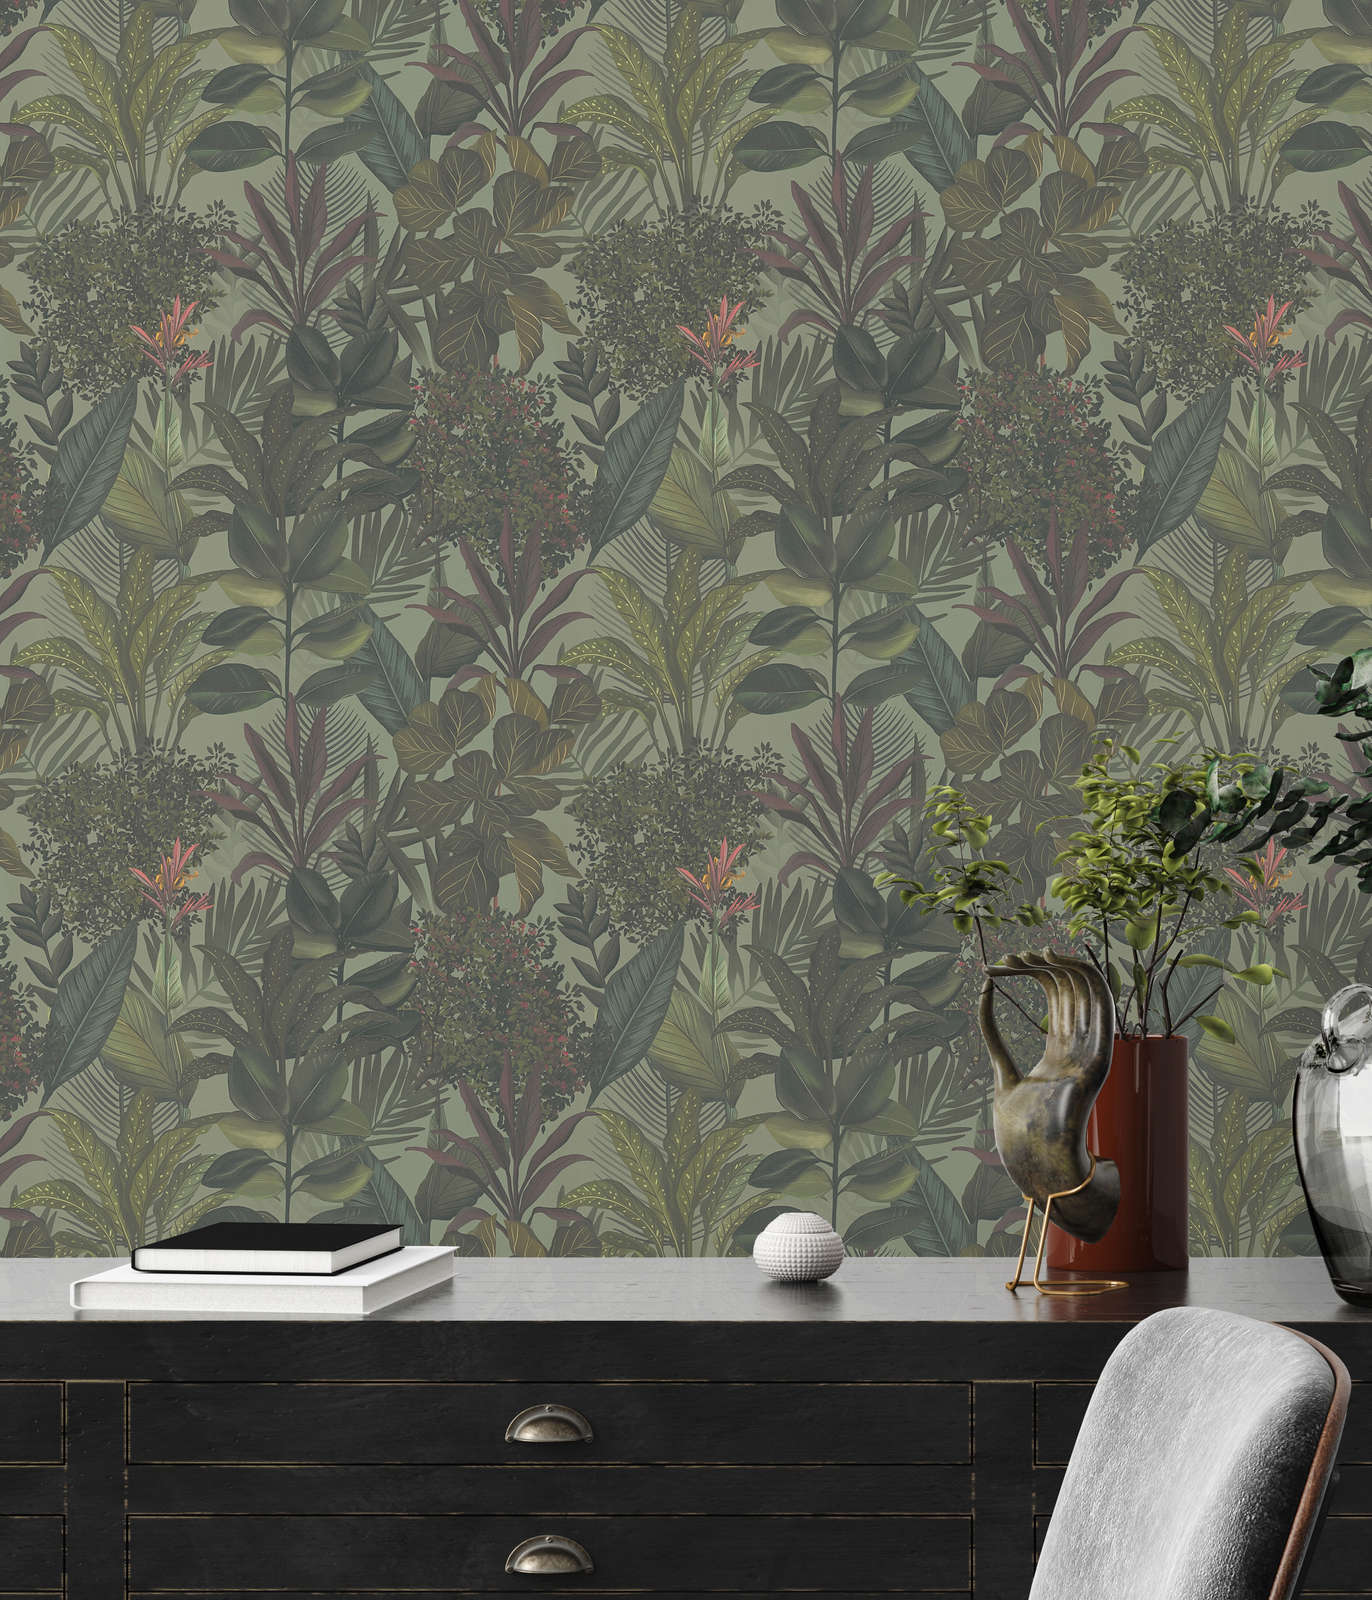             Modern wallpaper floral with leaves & grasses textured matt - green, dark green, bordeaux
        